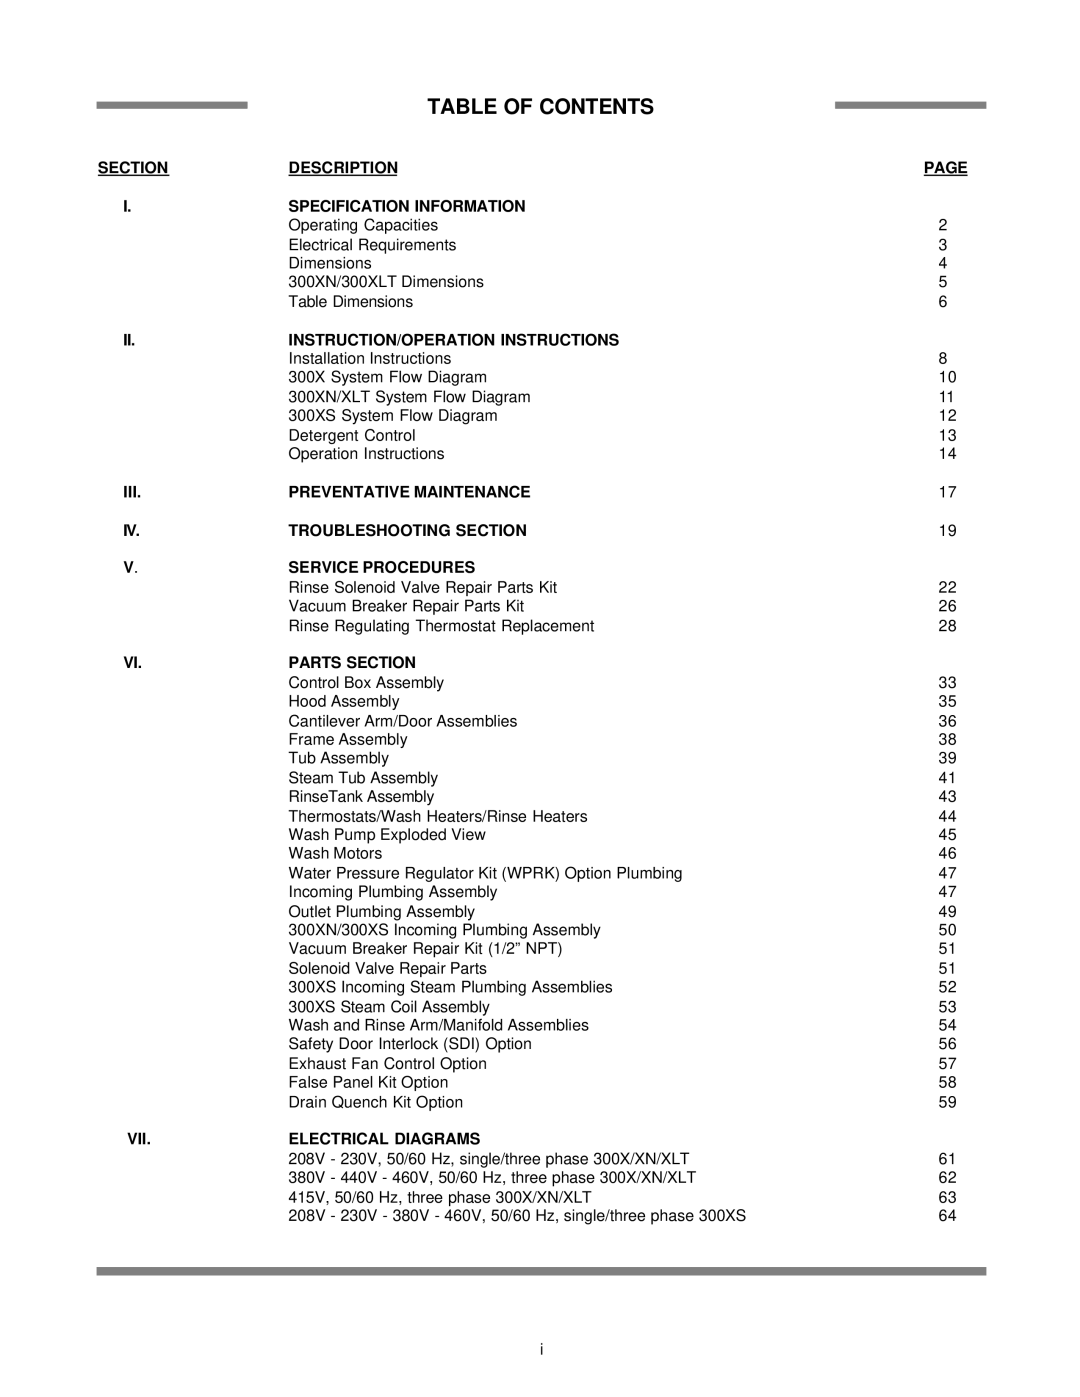 Jackson 300XLT, 300XS Table Of Contents, Section, Description, Page, Specification Information, Preventative Maintenance 